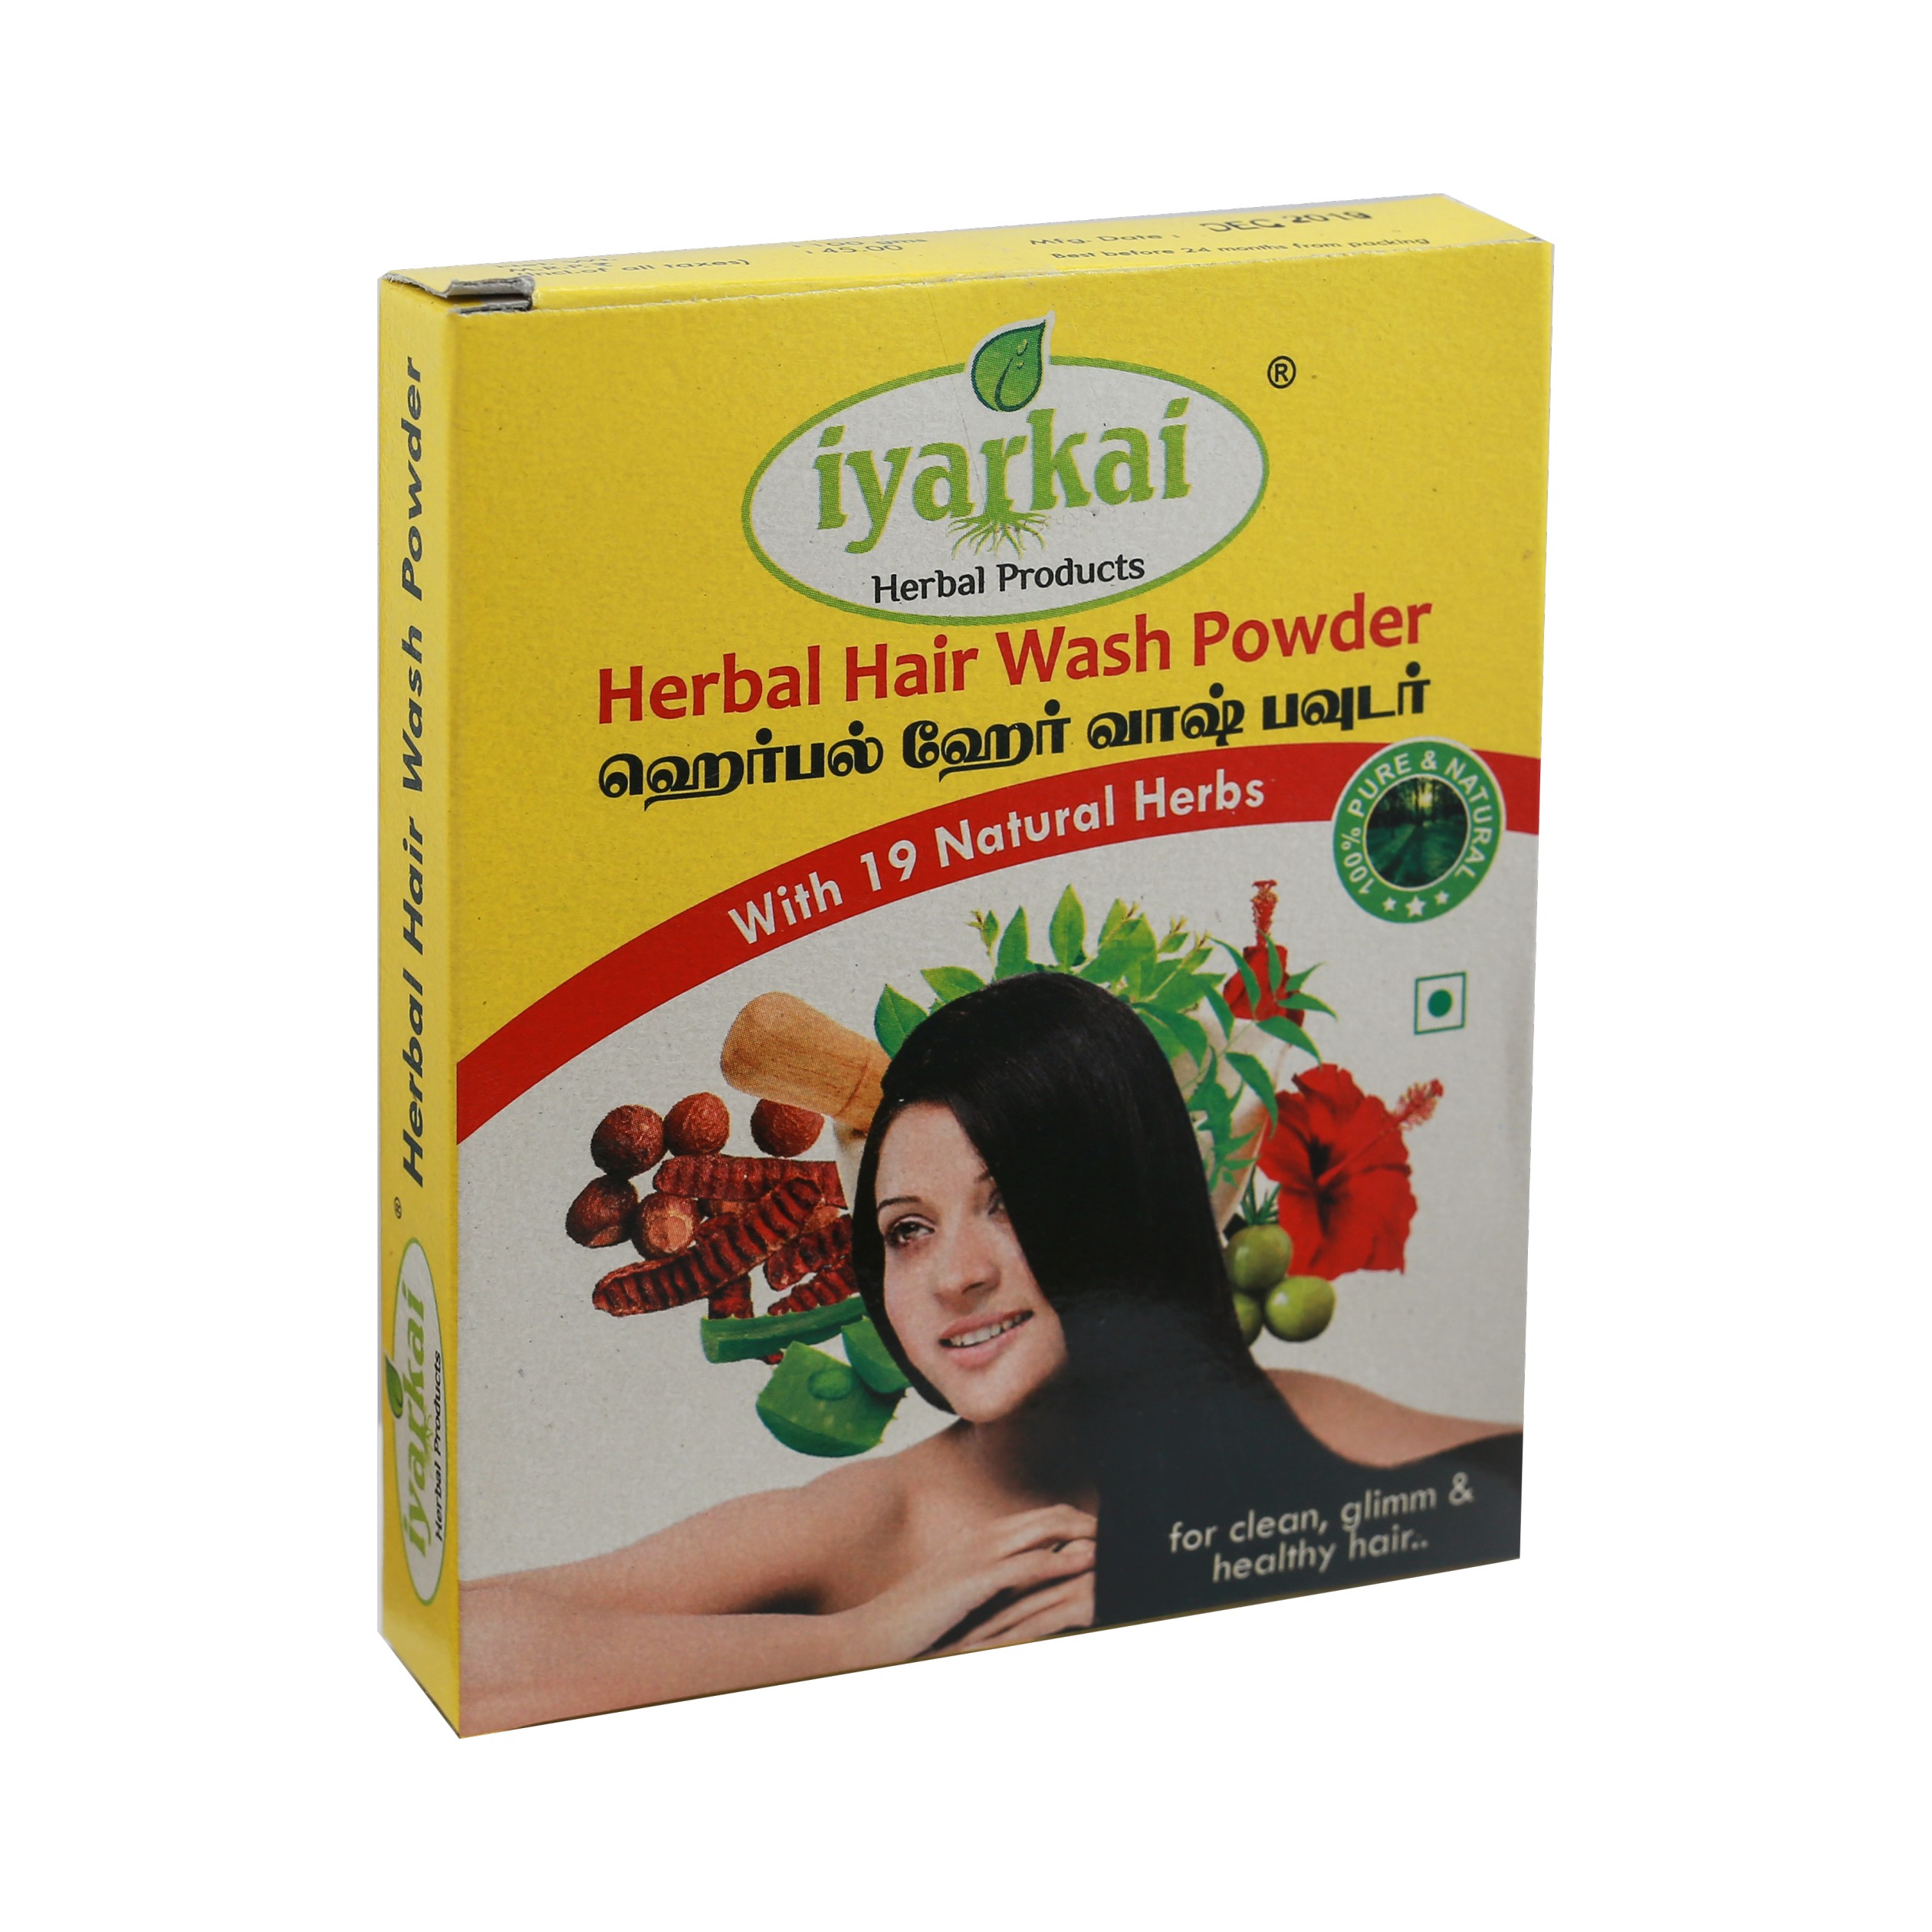 Iyarkai Herbal Hair Wash Powder 100gm - Iyarkai Herbal Products